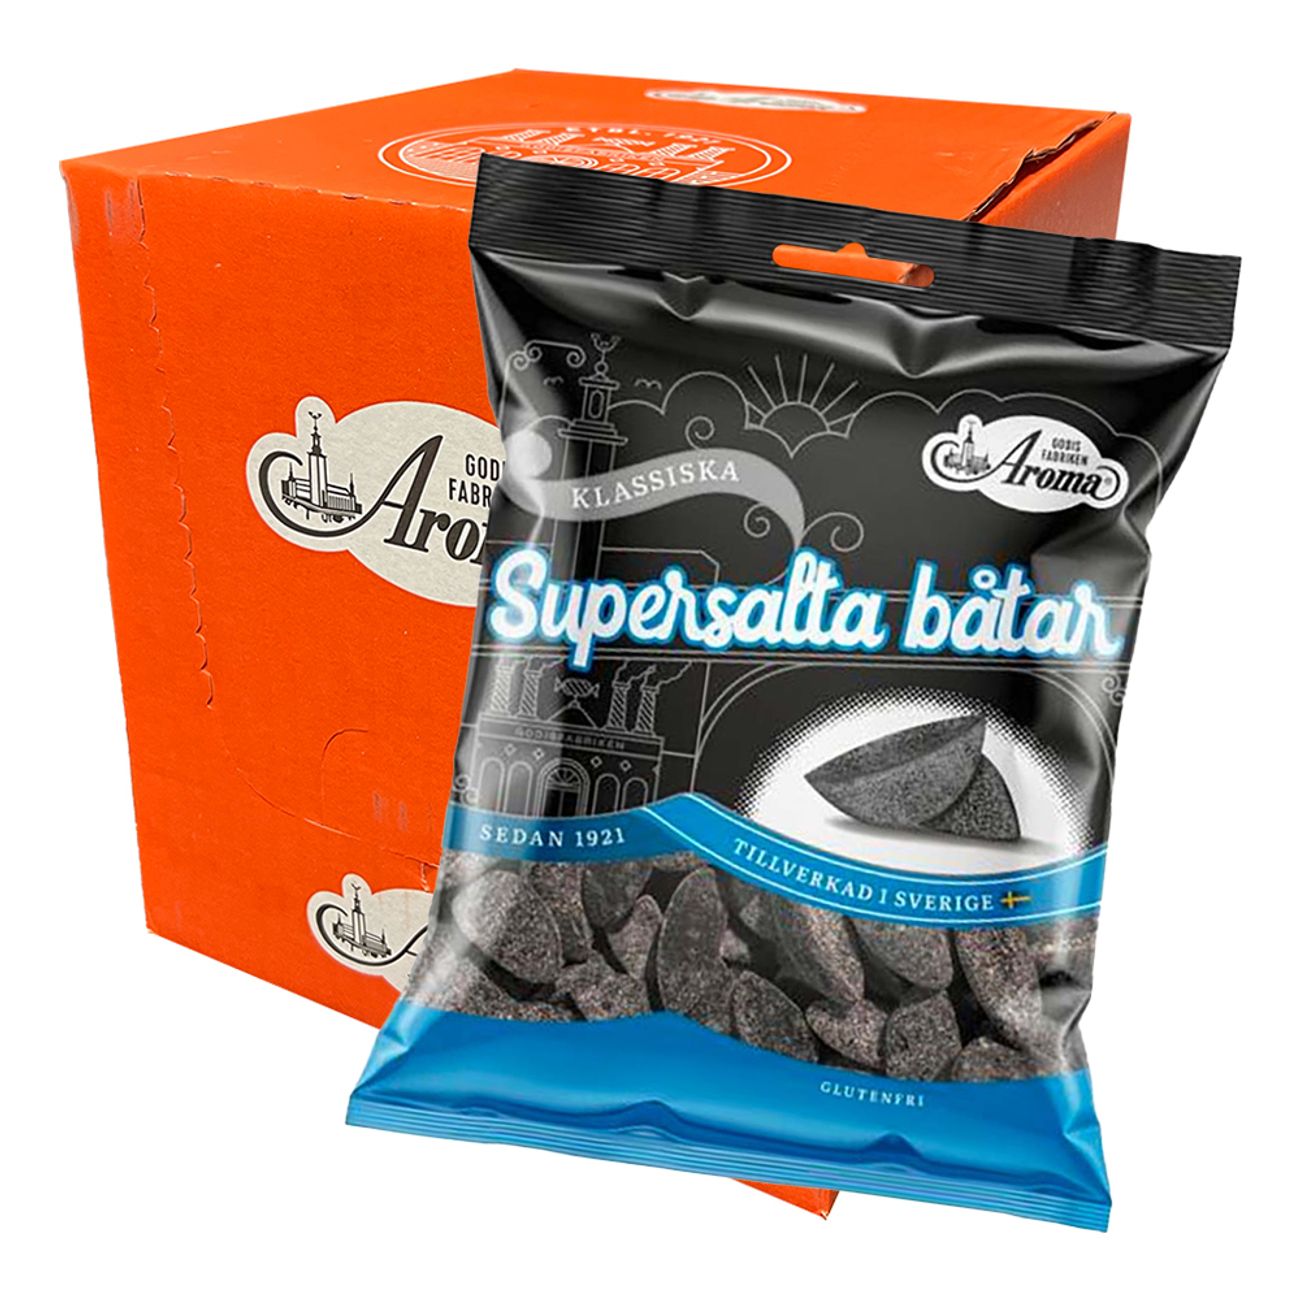 supersalta-batar-storpack-94920-2